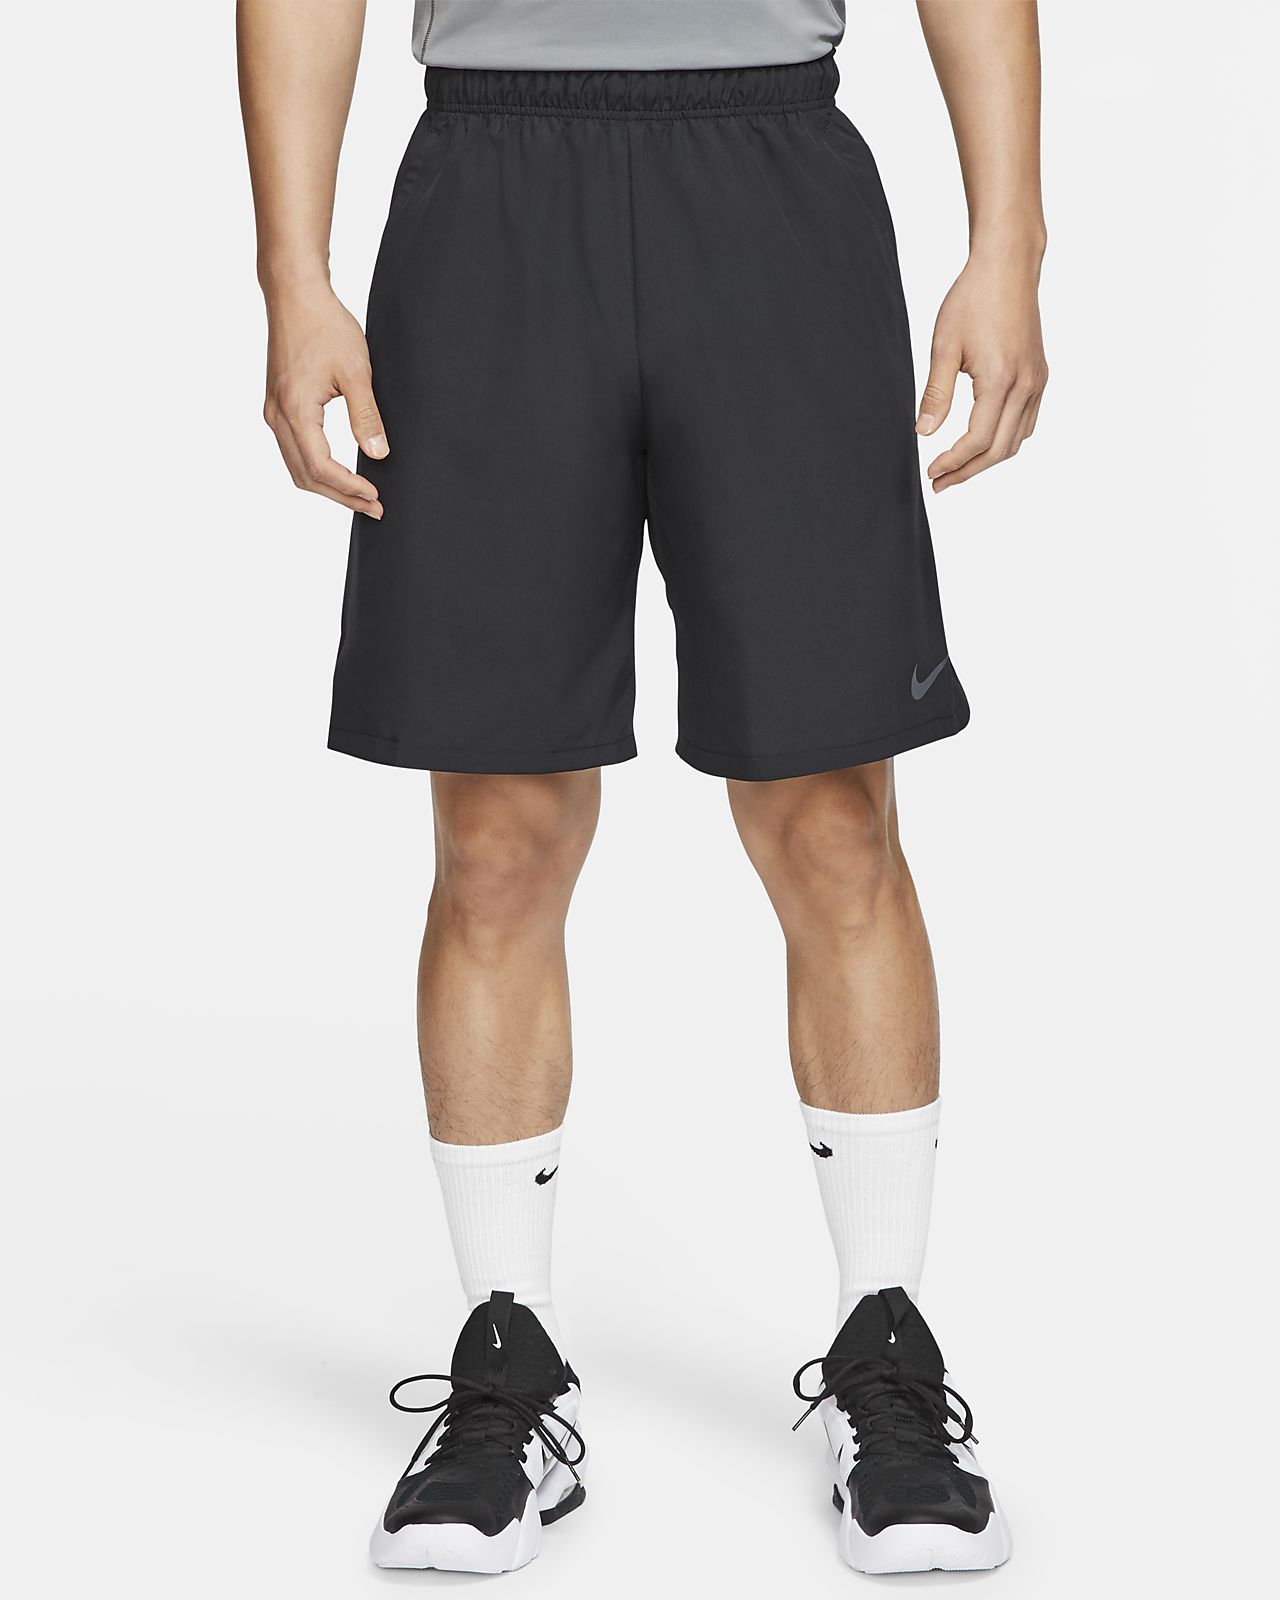 nike training flex 2.0 shorts in black